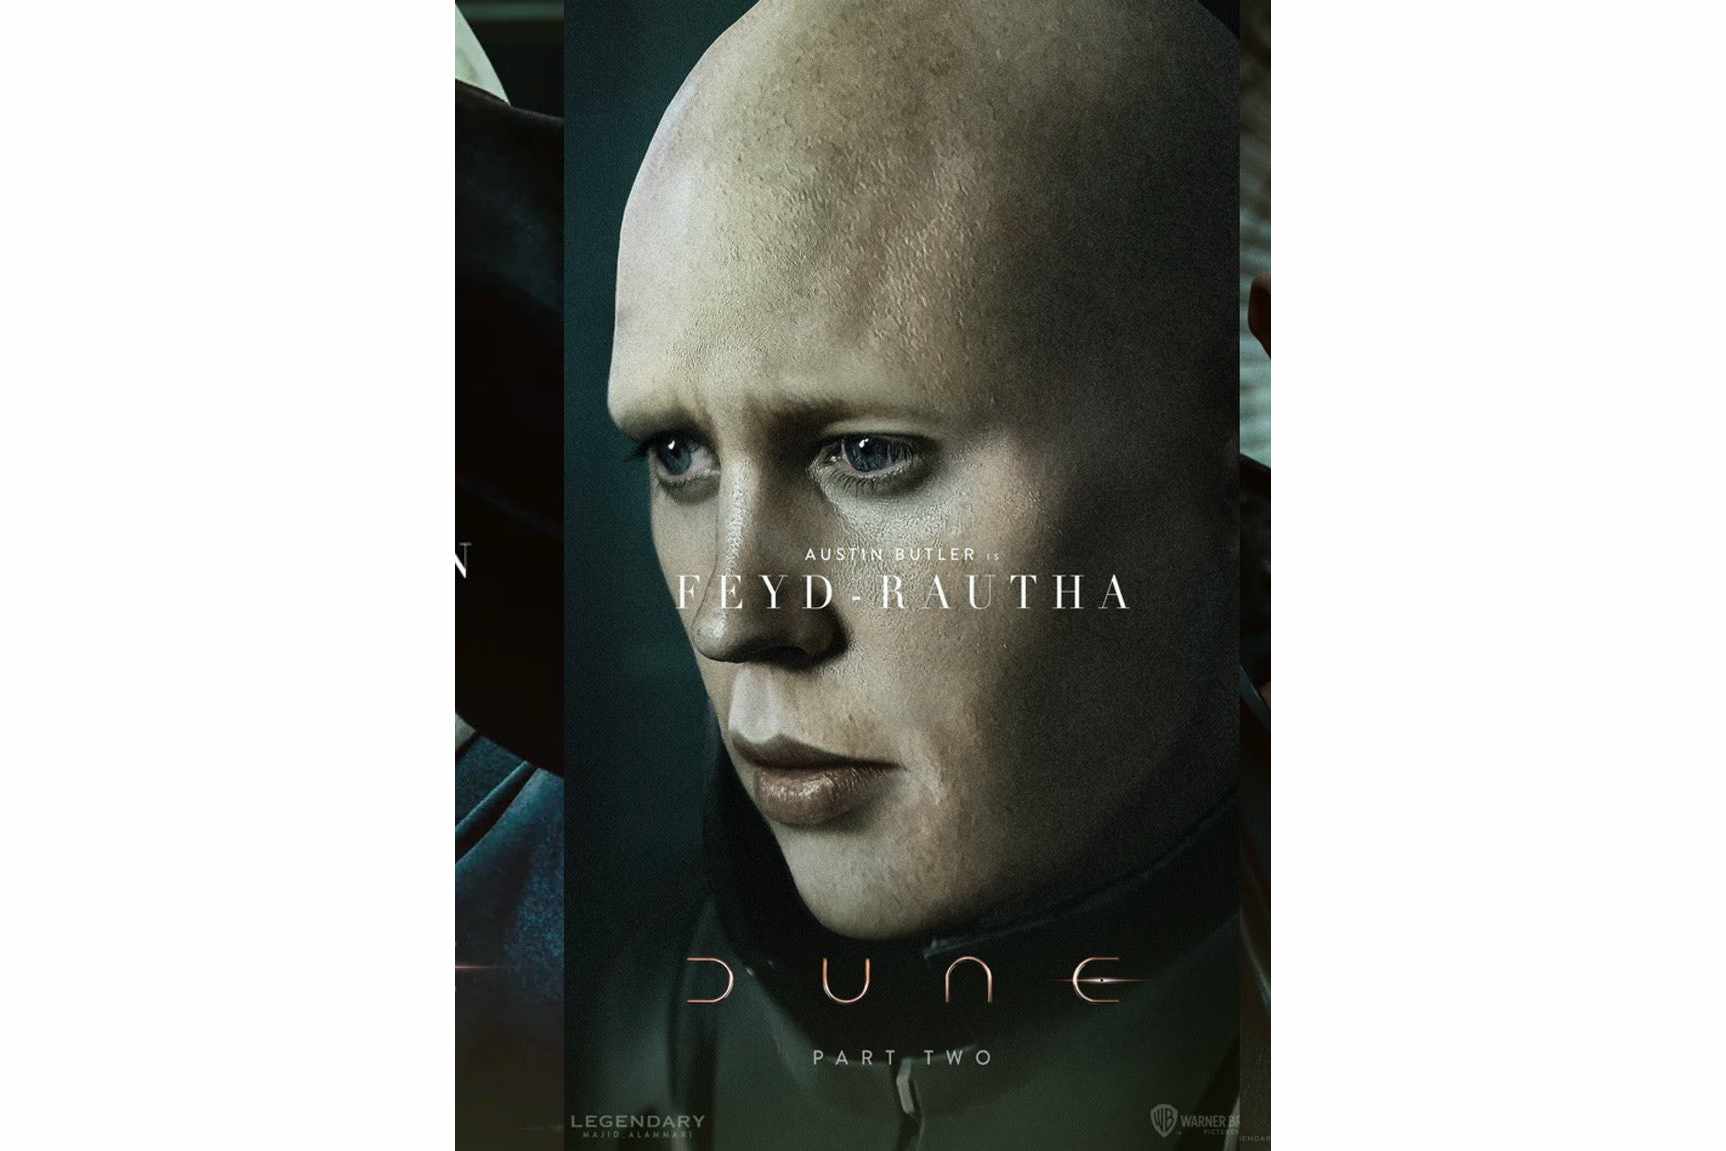 Austin Bulter is Feyd-Rautha Dune 2 movie poster